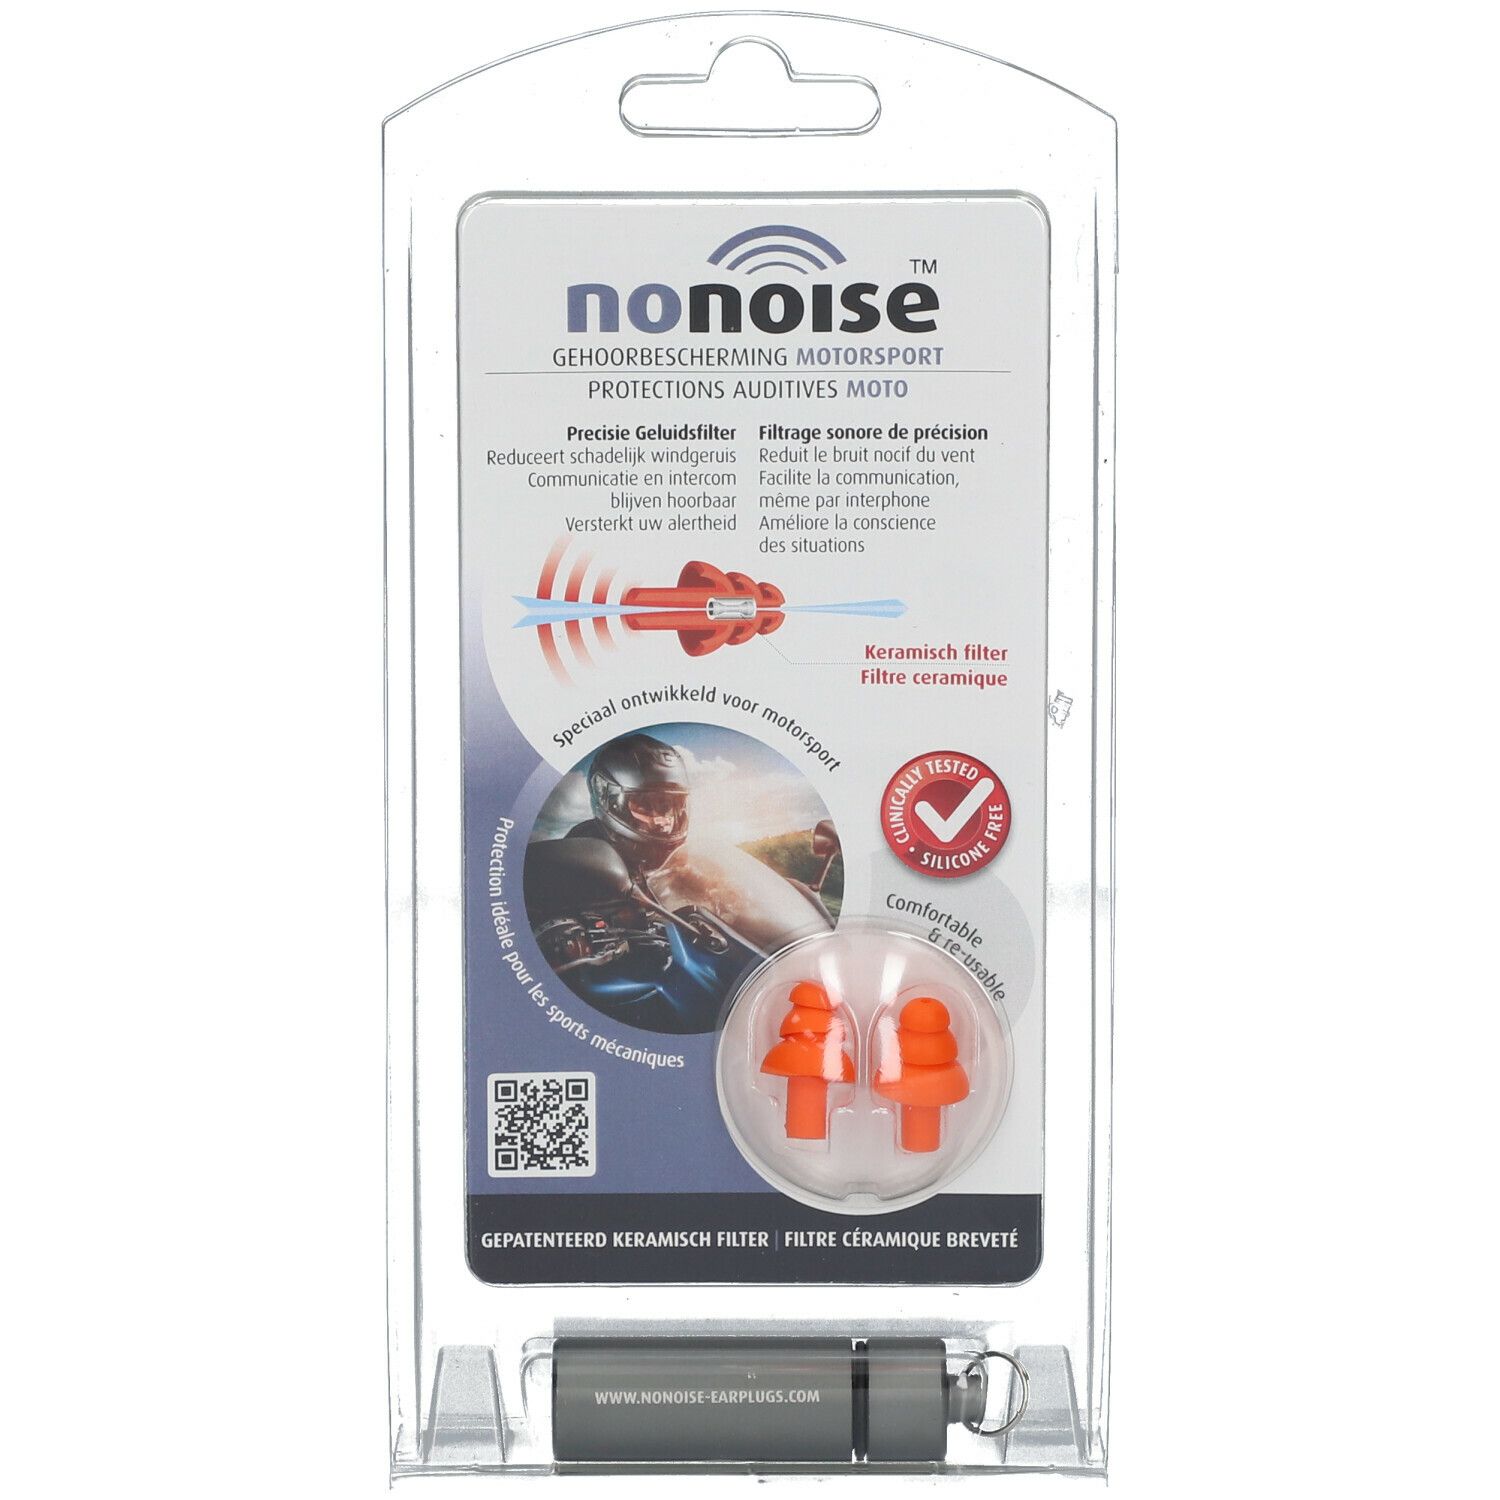 NoNoise™ Protection Auditive Moto